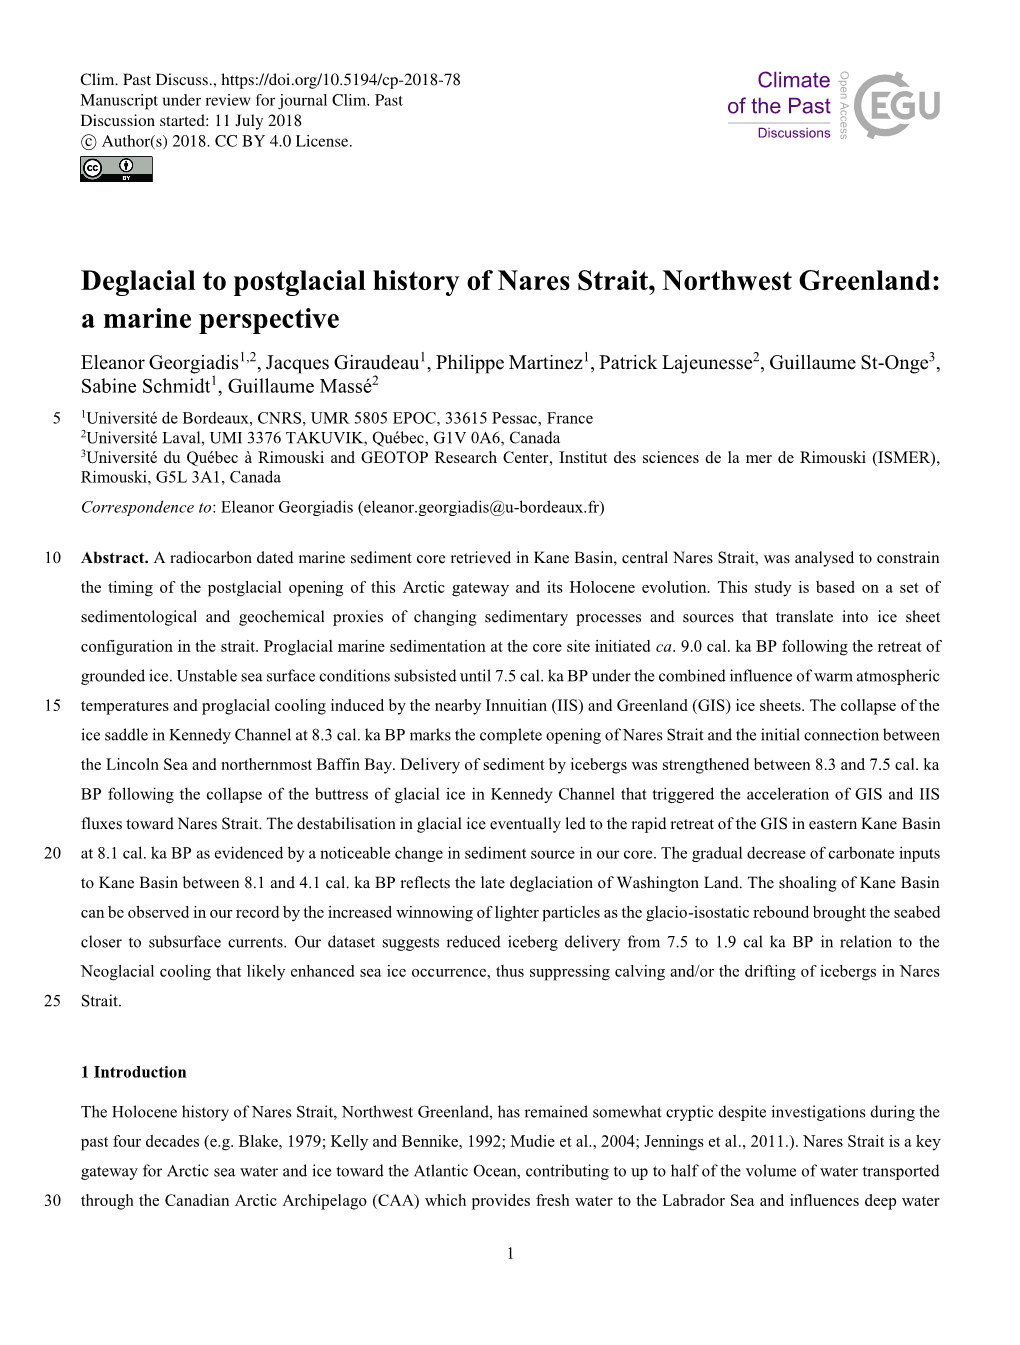 Deglacial to Postglacial History of Nares Strait, Northwest